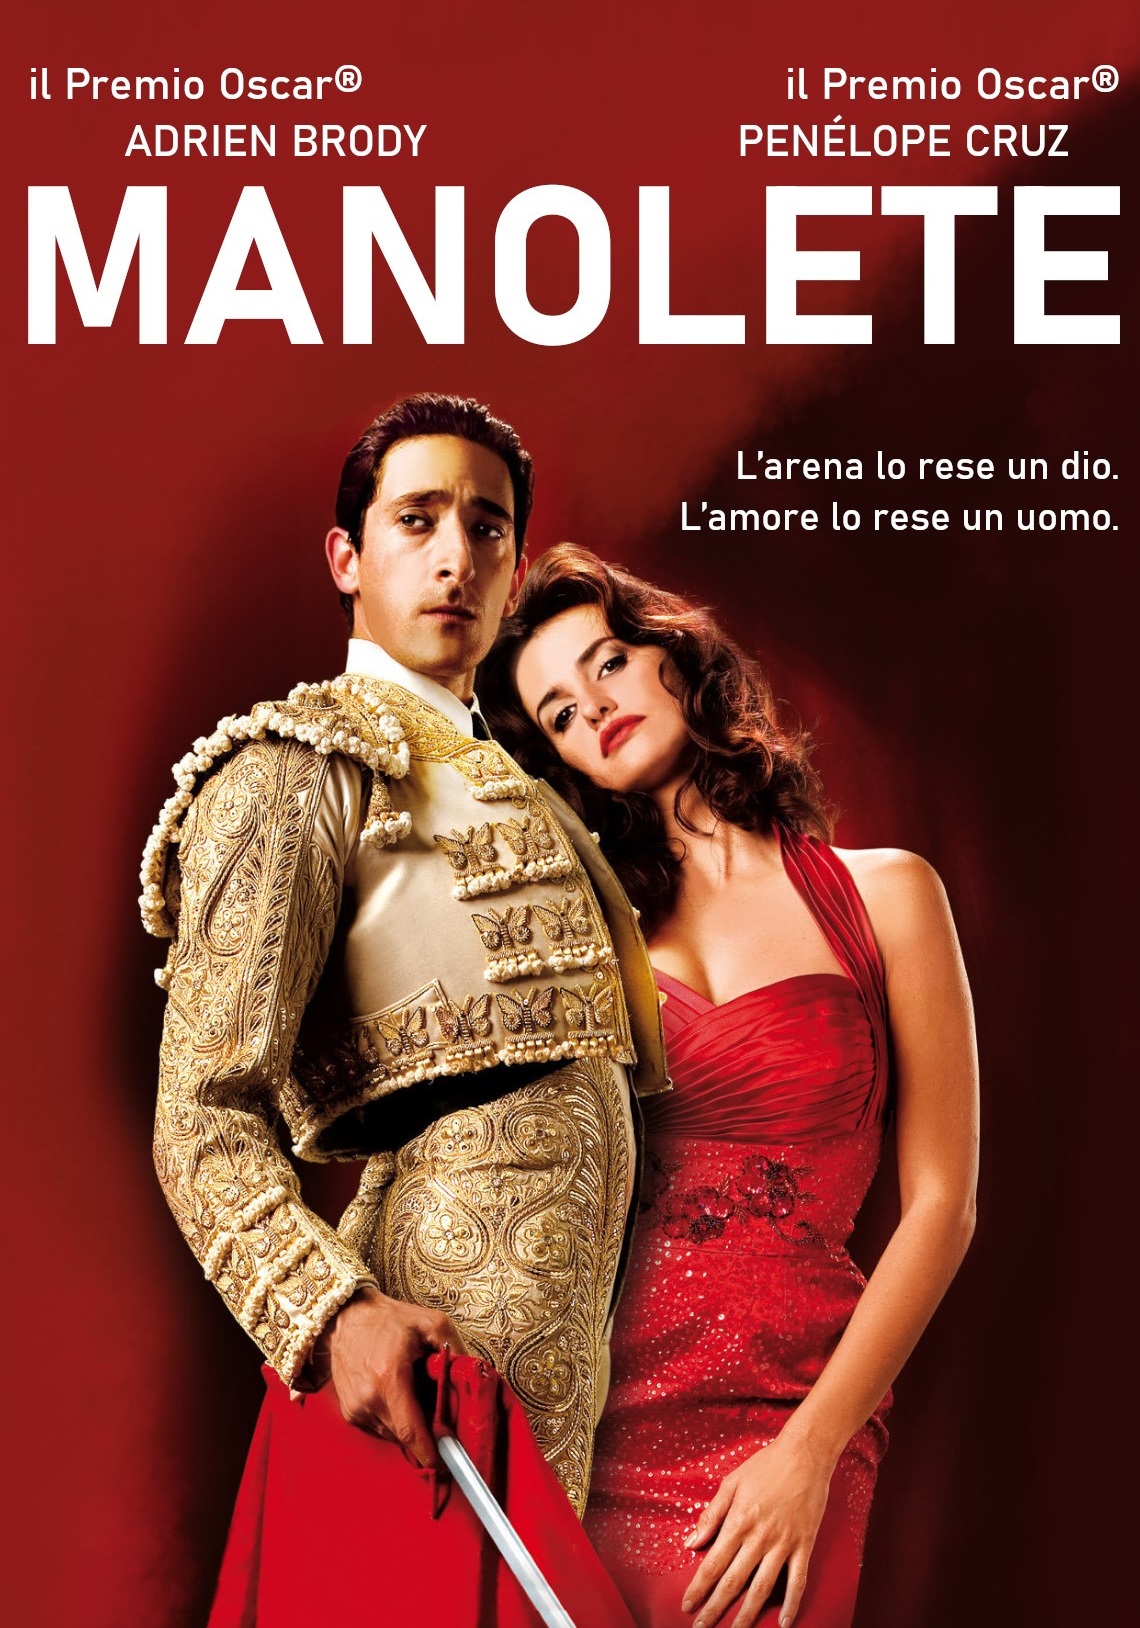 Manolete [HD] (2007)